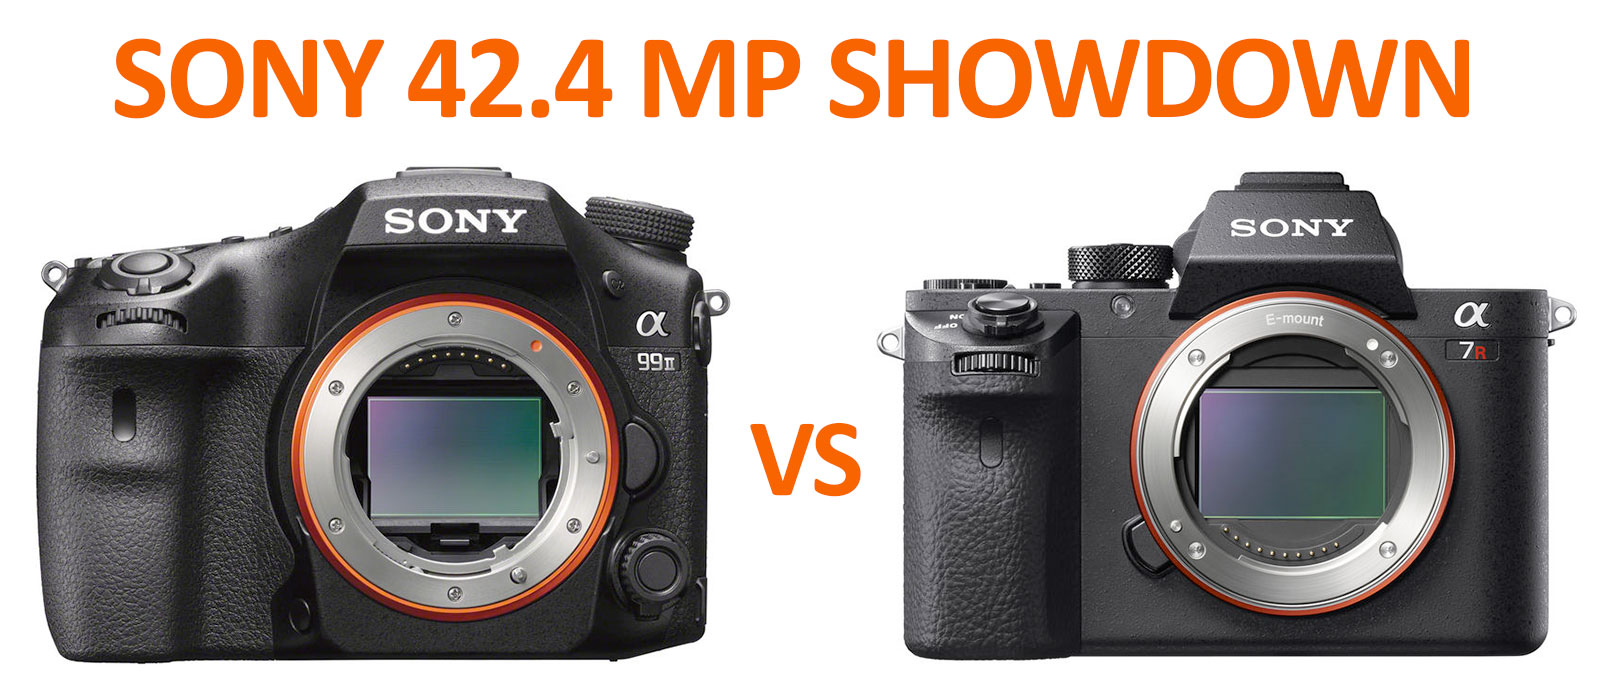 Sony-a99II-vs-a7RII-42-mp-Showdown